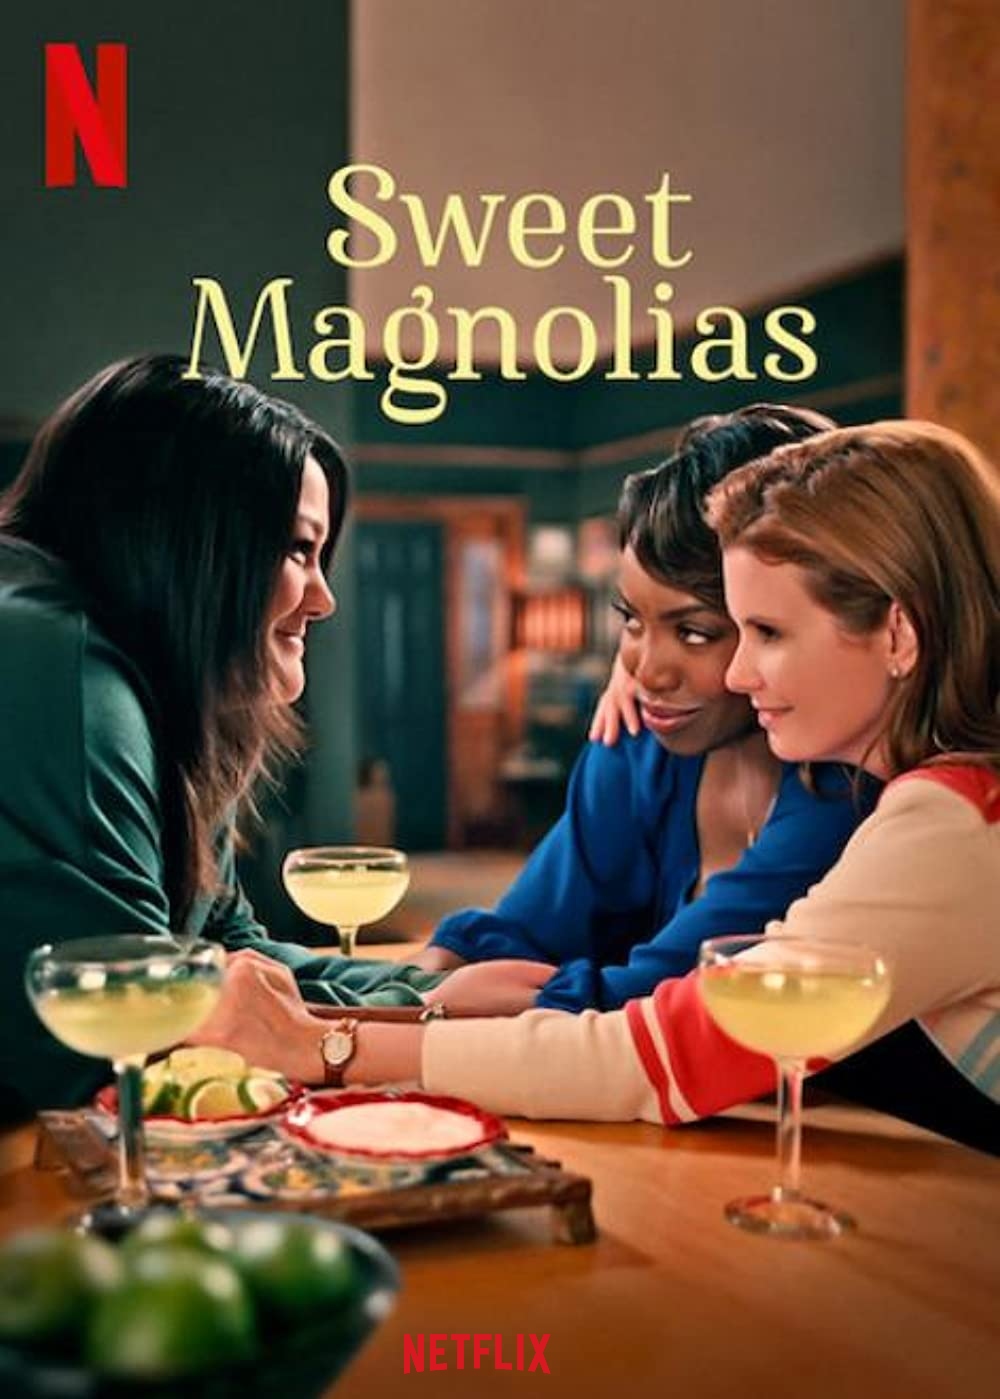 Is “Sweet Magnolias Season 2” on Netflix